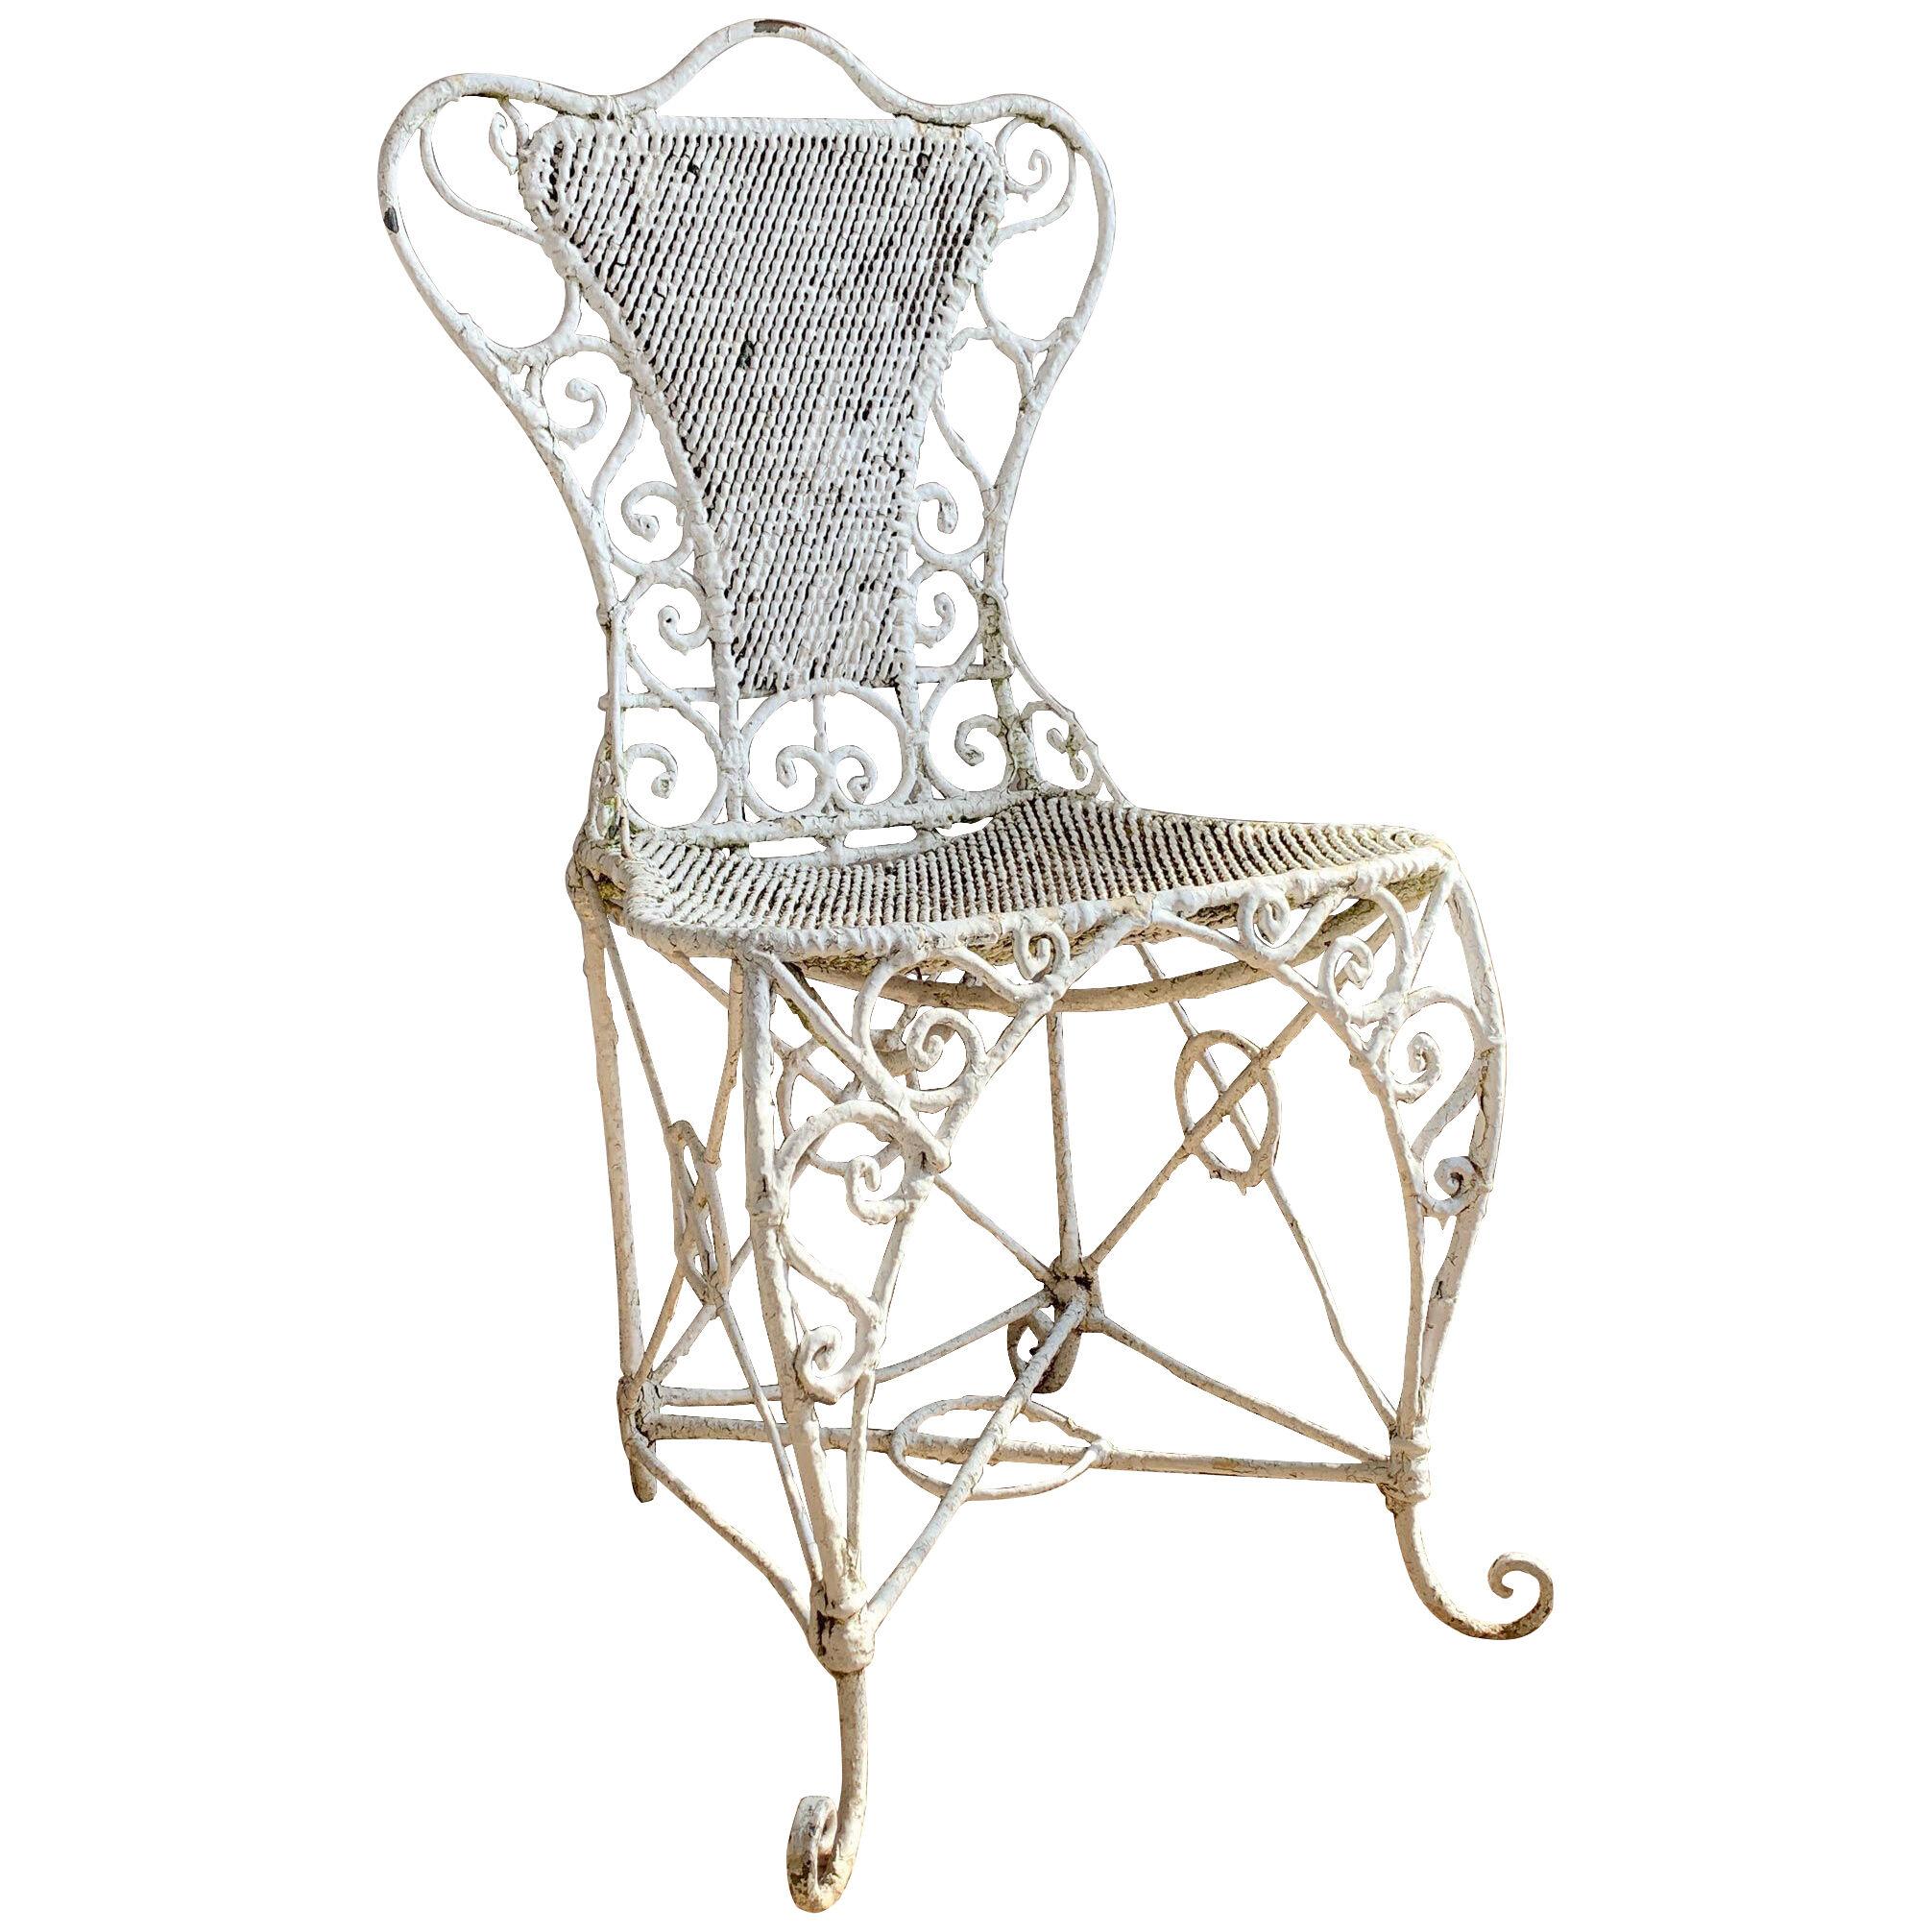 An Ornate Regency Wirework Iron Chair